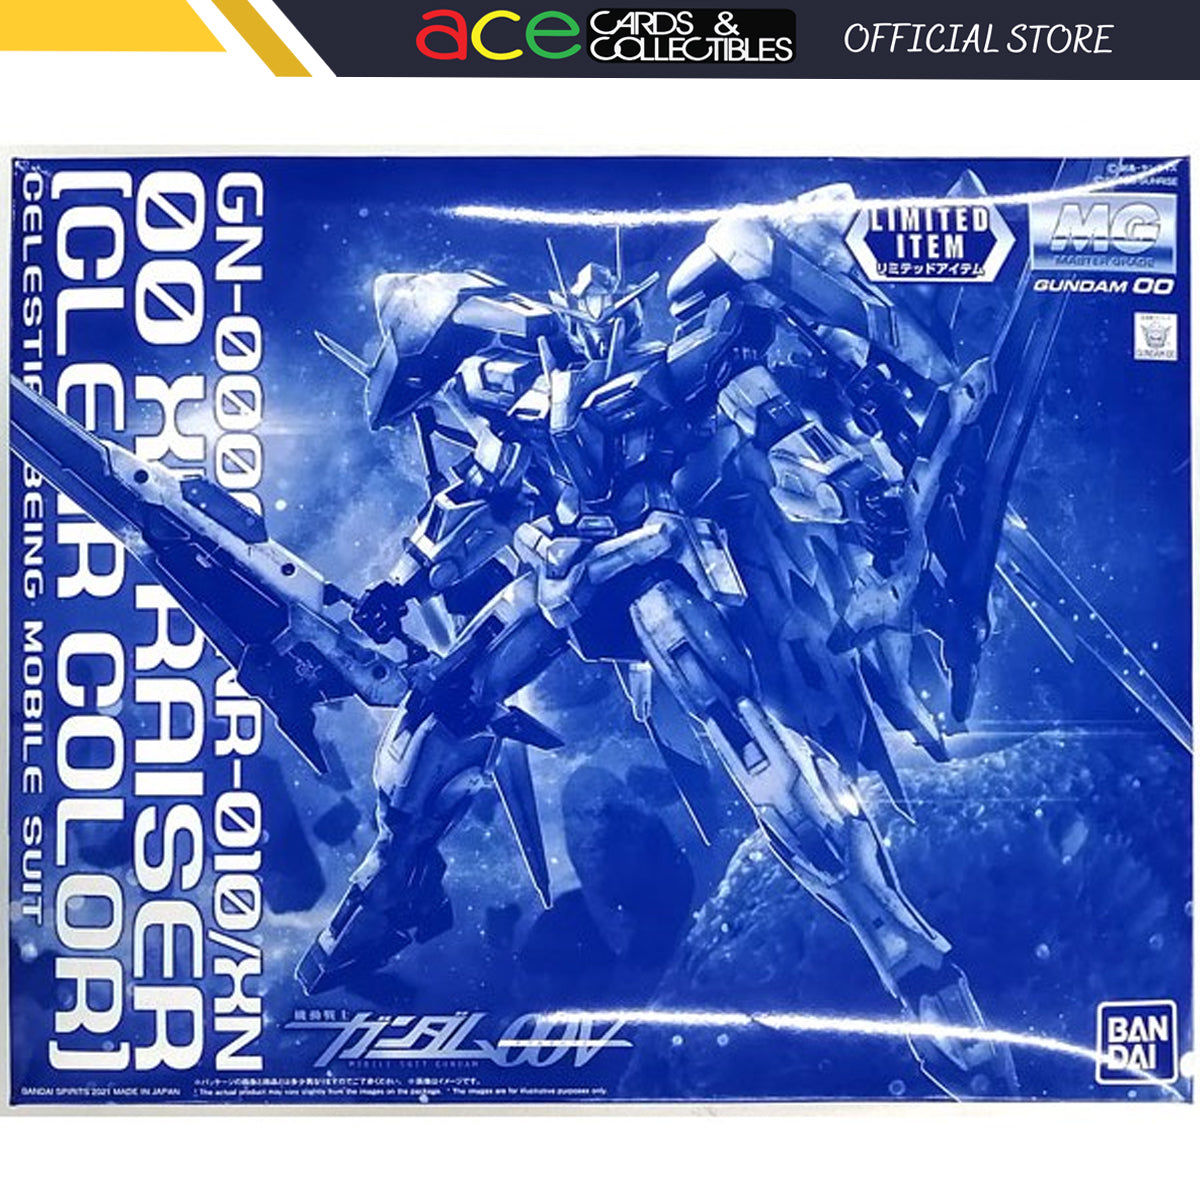 Bandai Hobby - Maquette Gundam - Gundam Avalanche Exia Gunpla MG 1/100 18  cm - 4573102635310